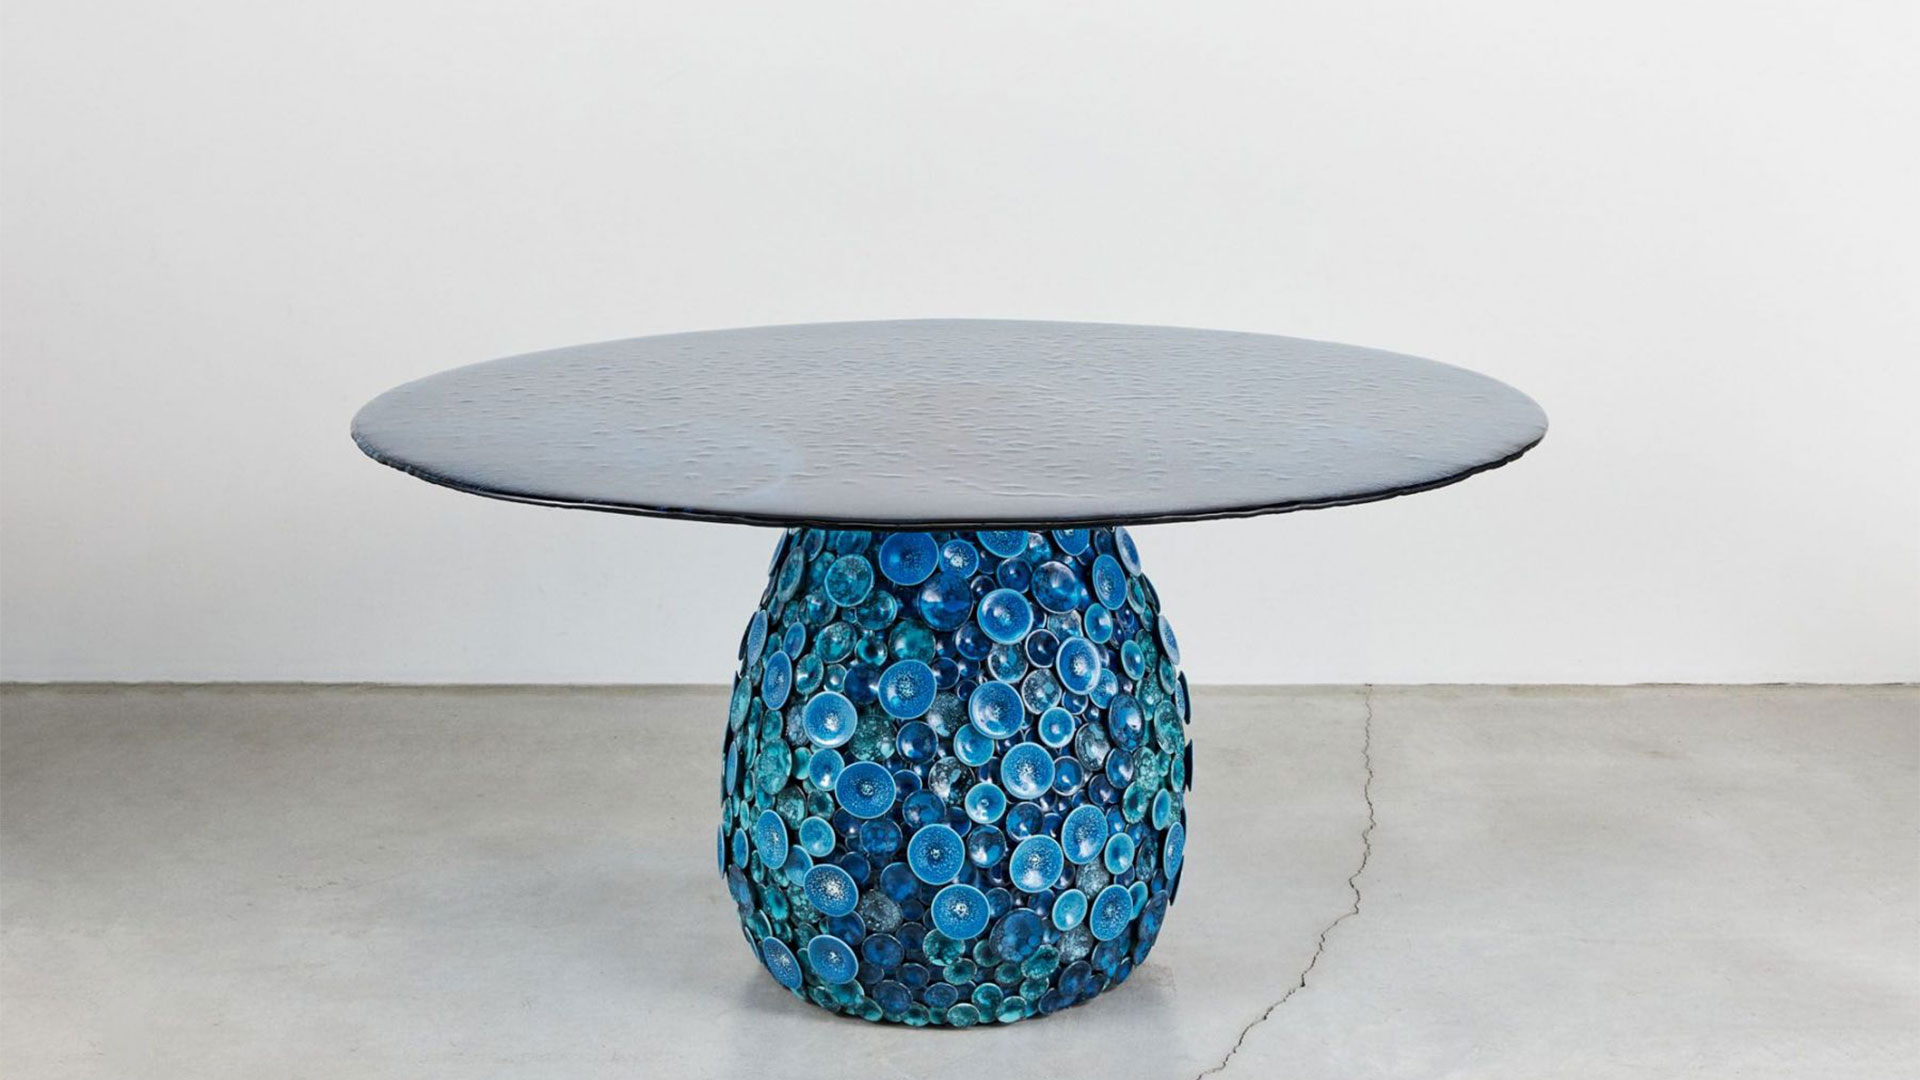 Acquario dining table by Nilufar Gallery